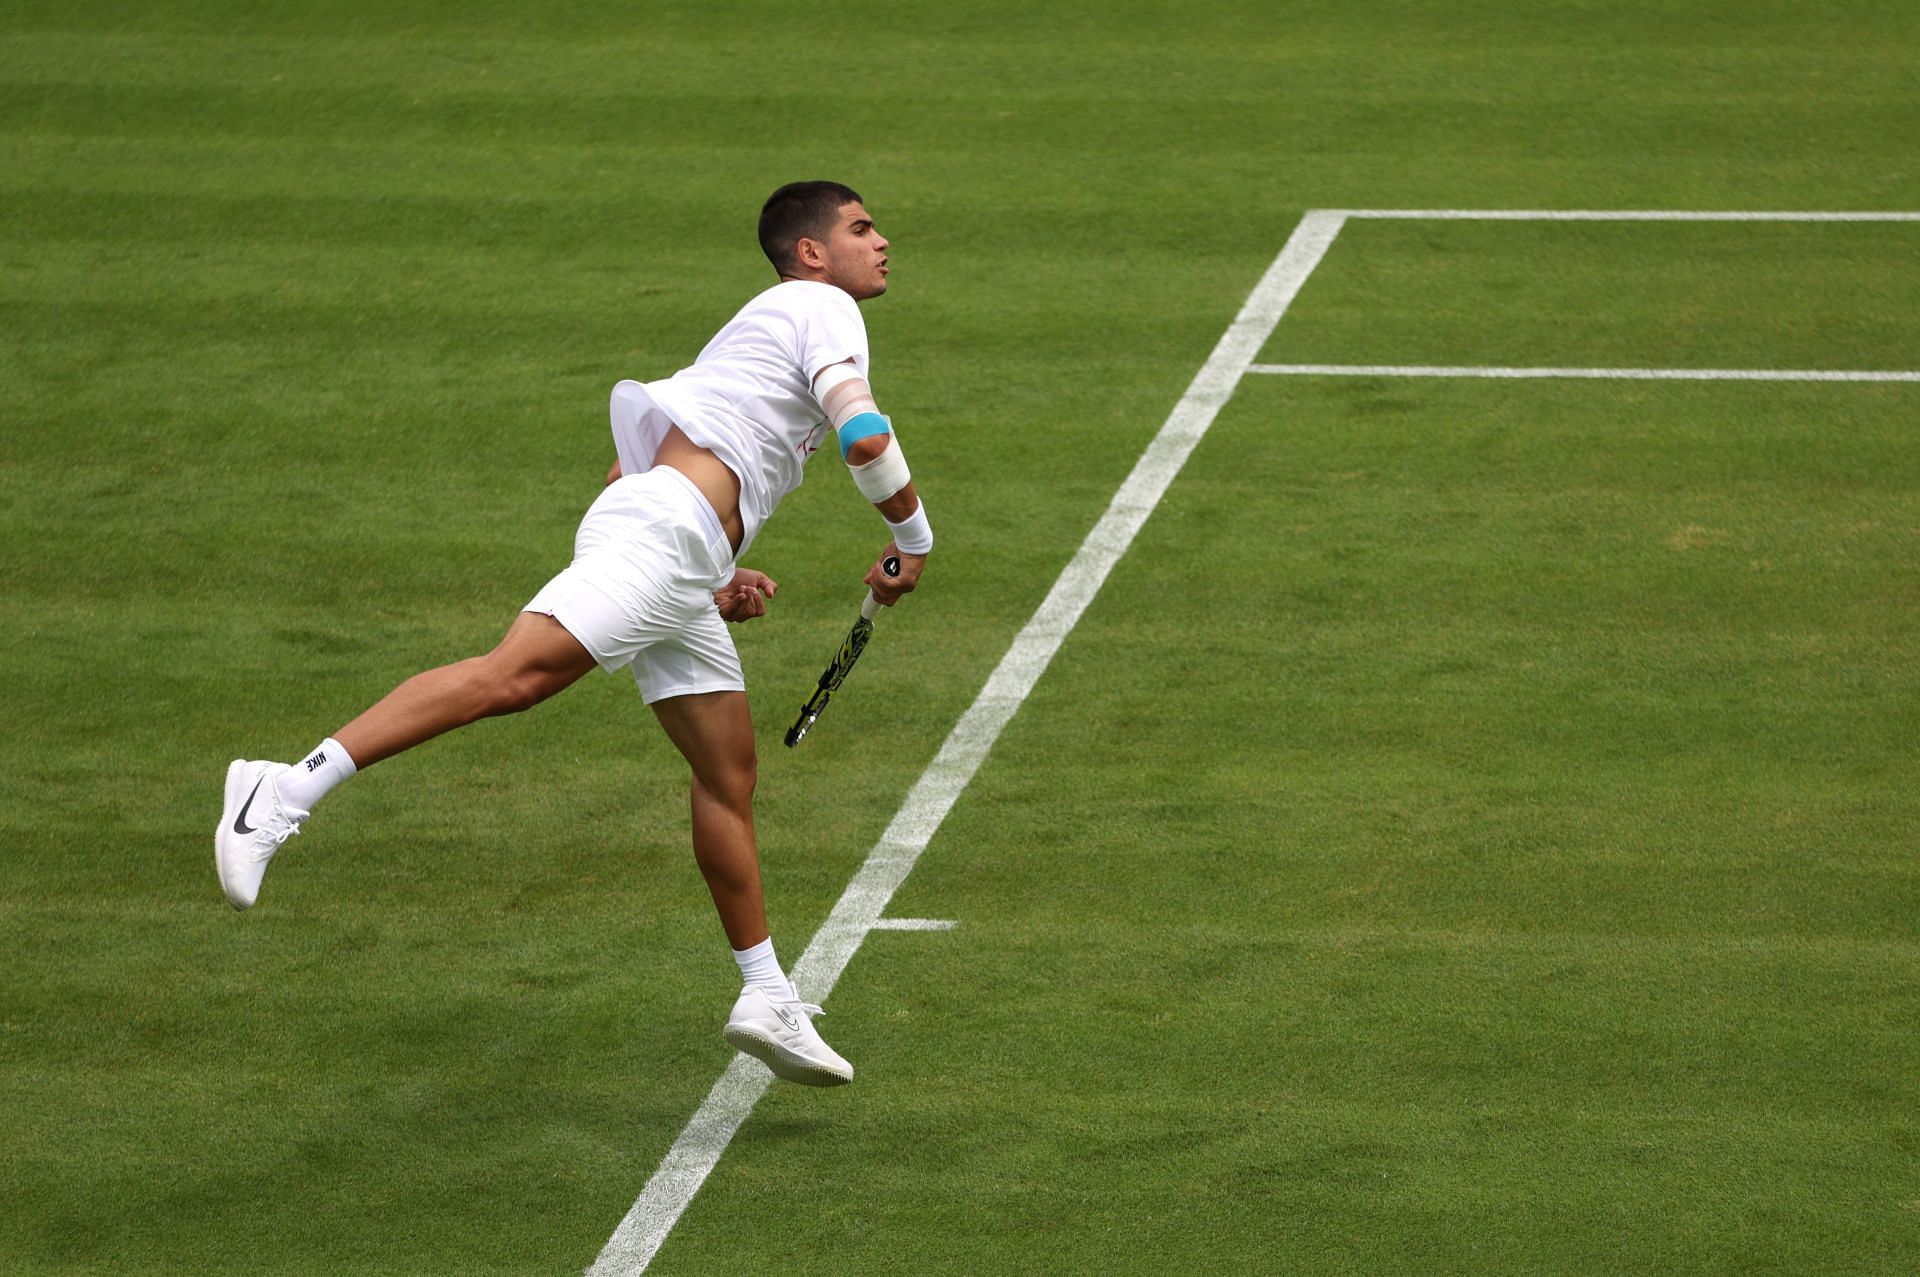 Carlos Alcaraz will take on Jan-Lennard Struff in the first round at Wimbledon